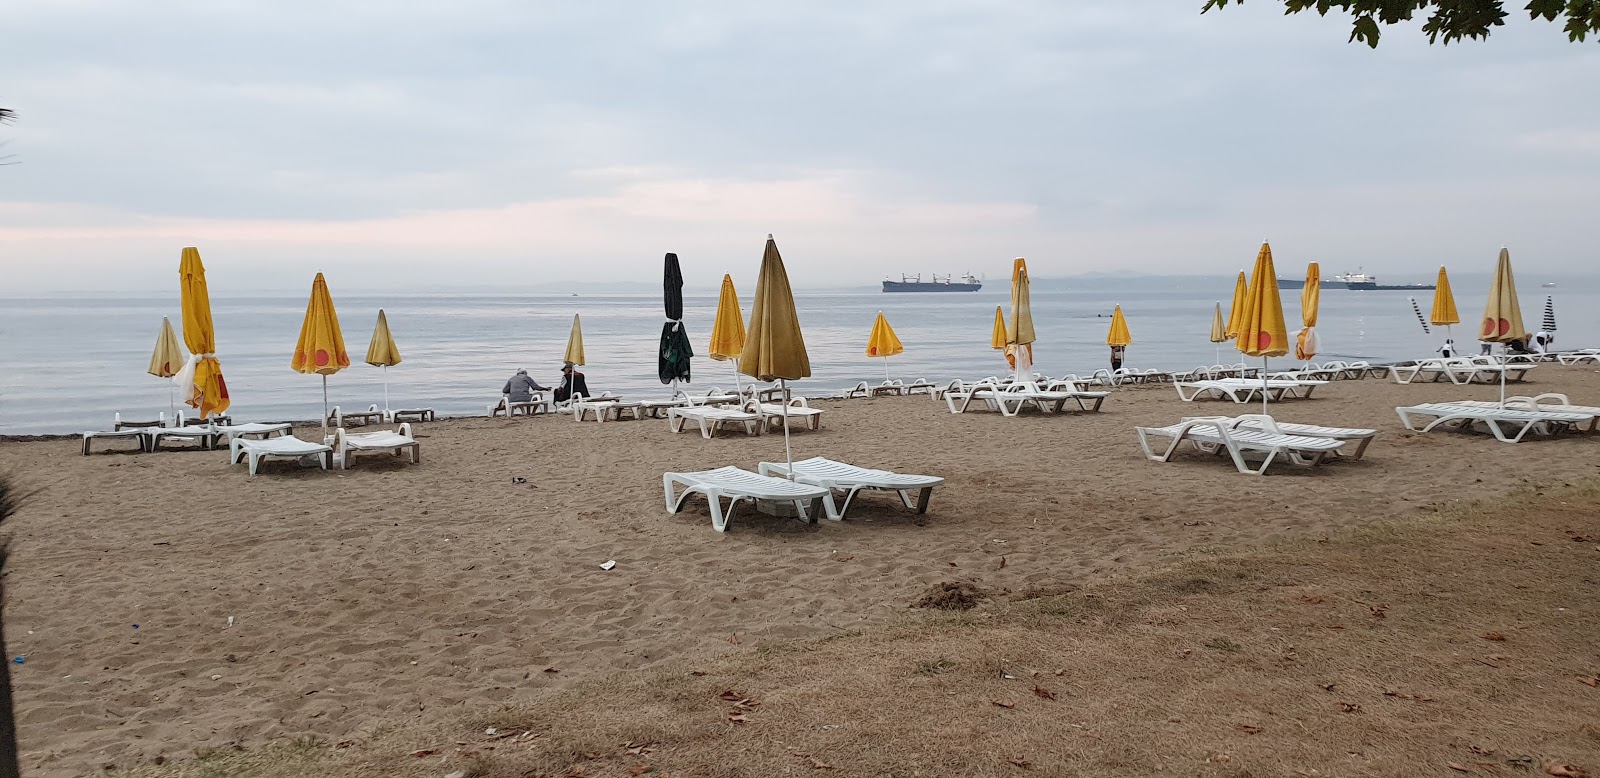 Fotografie cu Dejavu beach cu nivelul de curățenie in medie